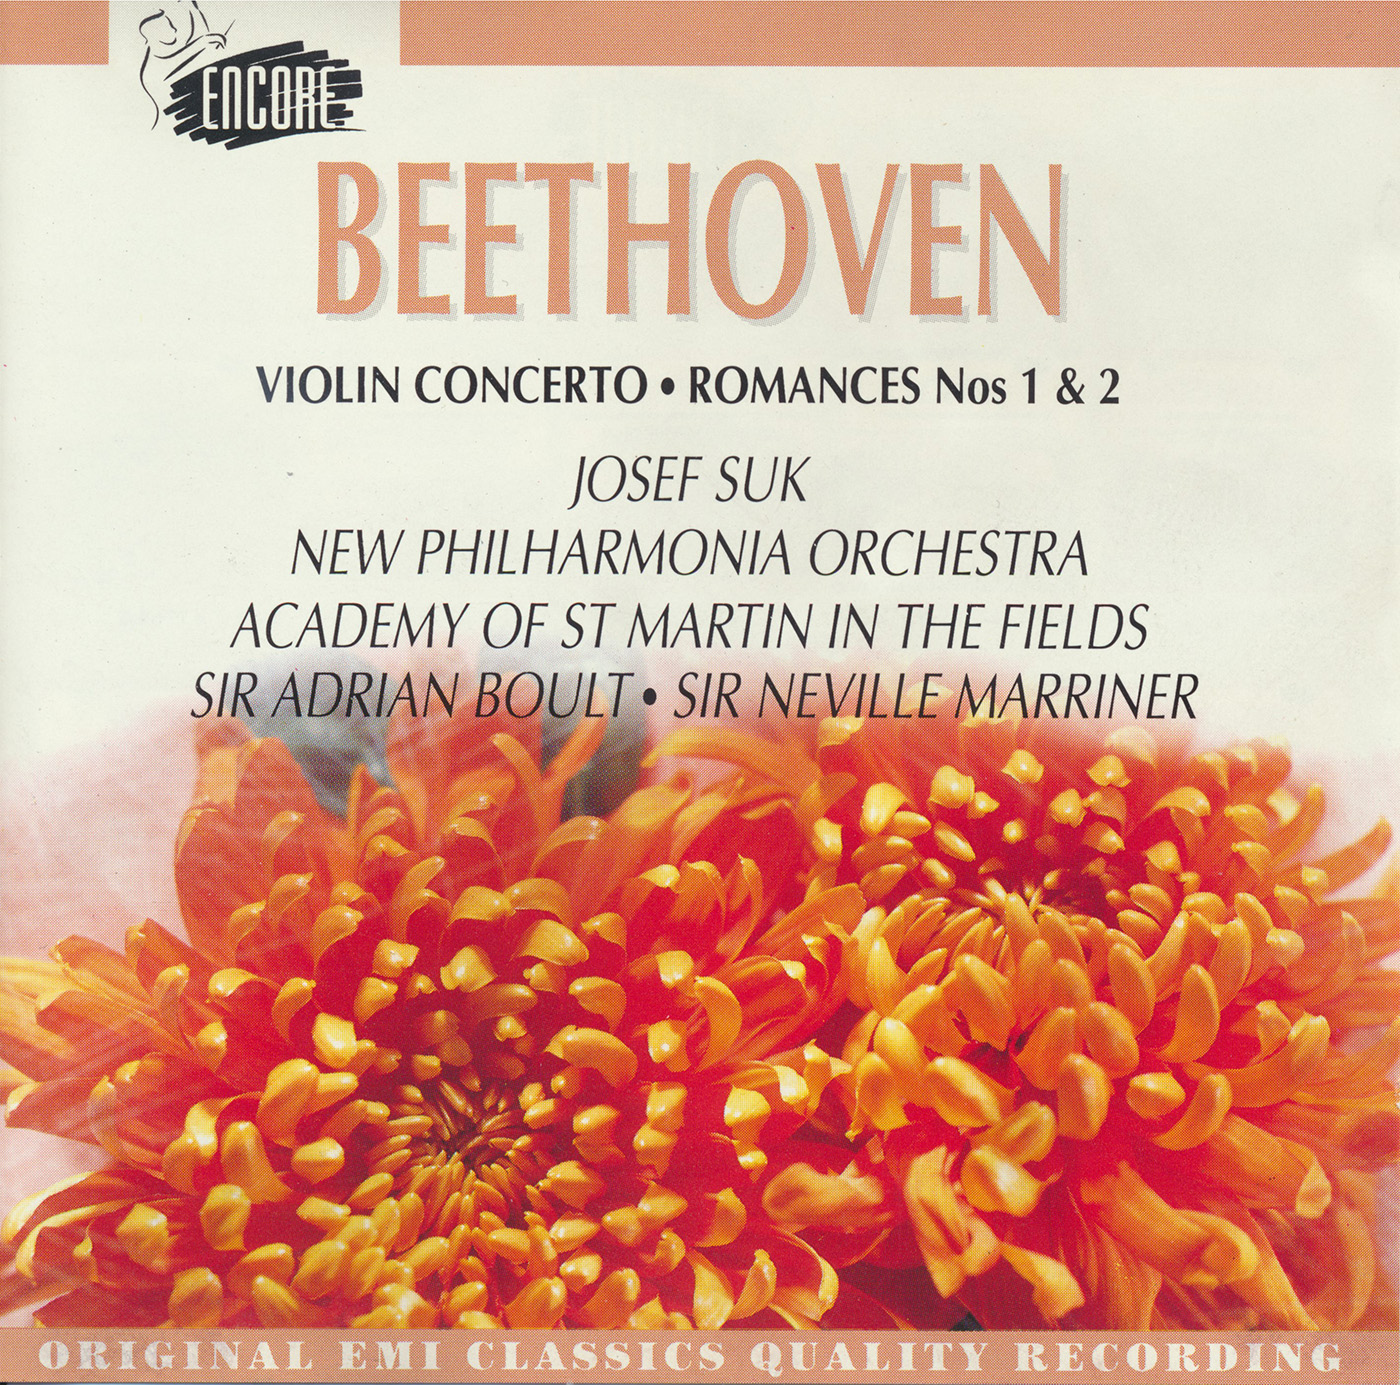 Beethoven - Violin Concerto, Romances - Suk, Boult, Marriner